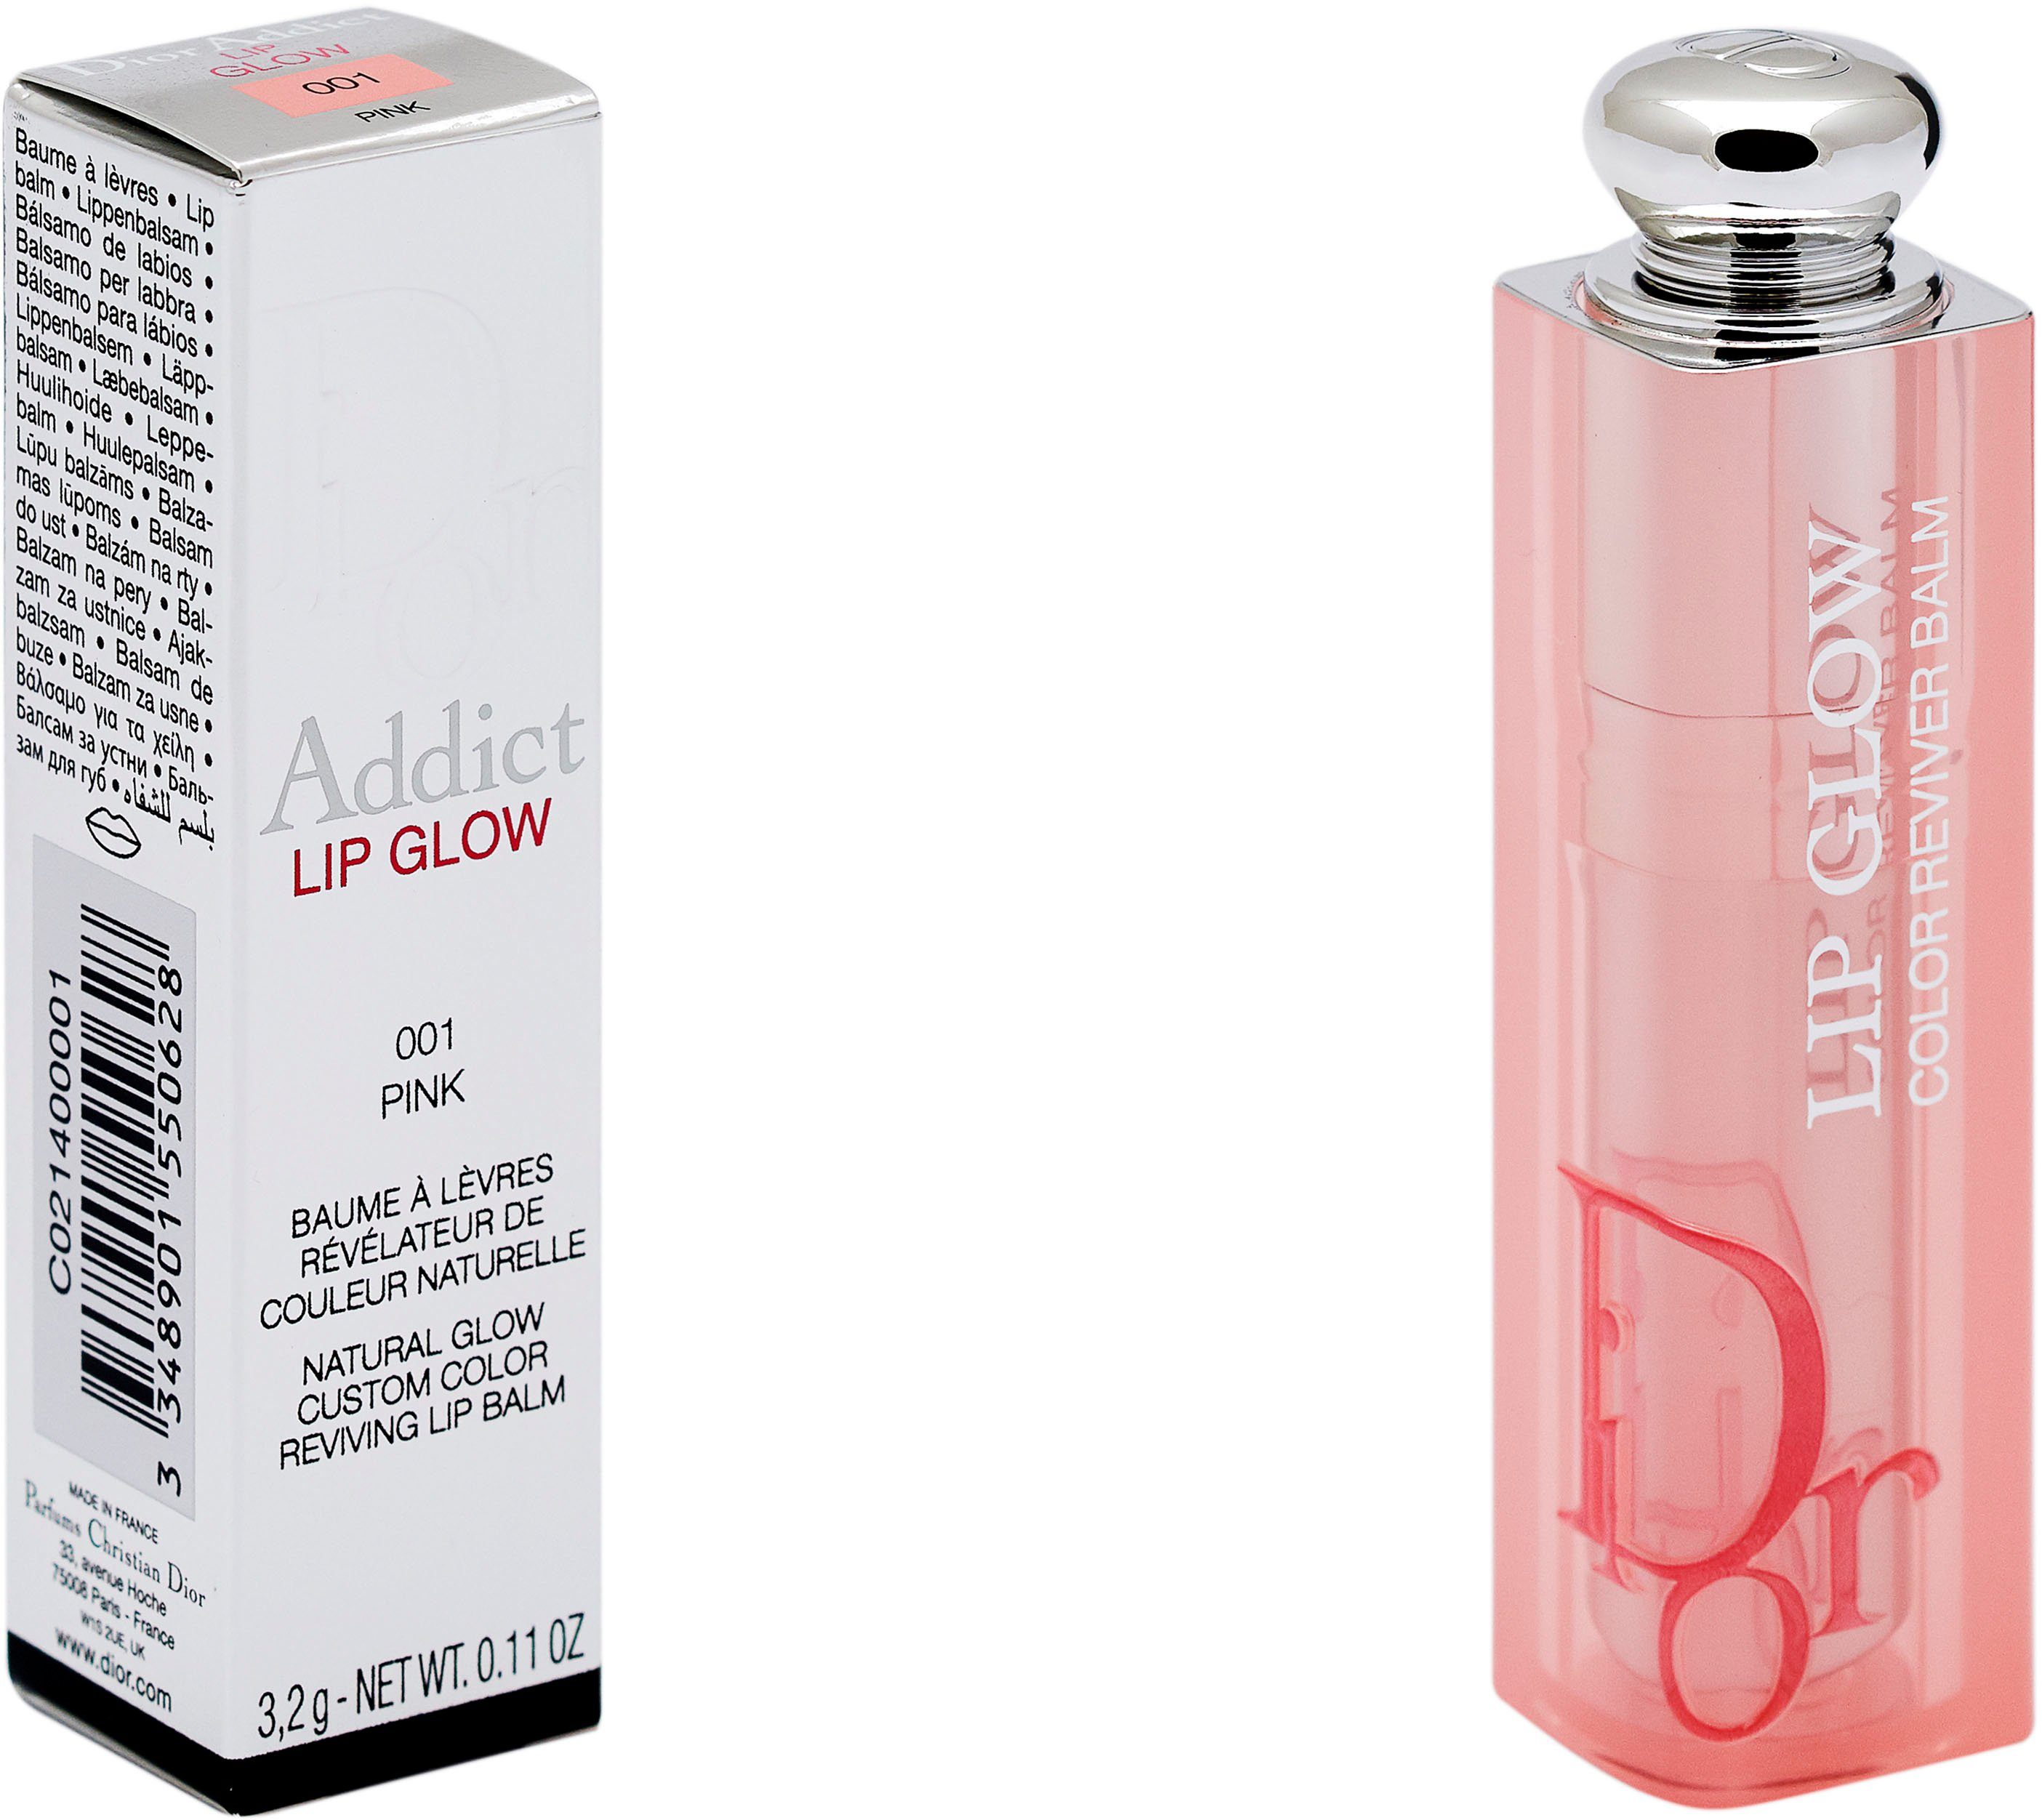 Dior Lippenbalsam Pink Lip Glow Dior Addict 001